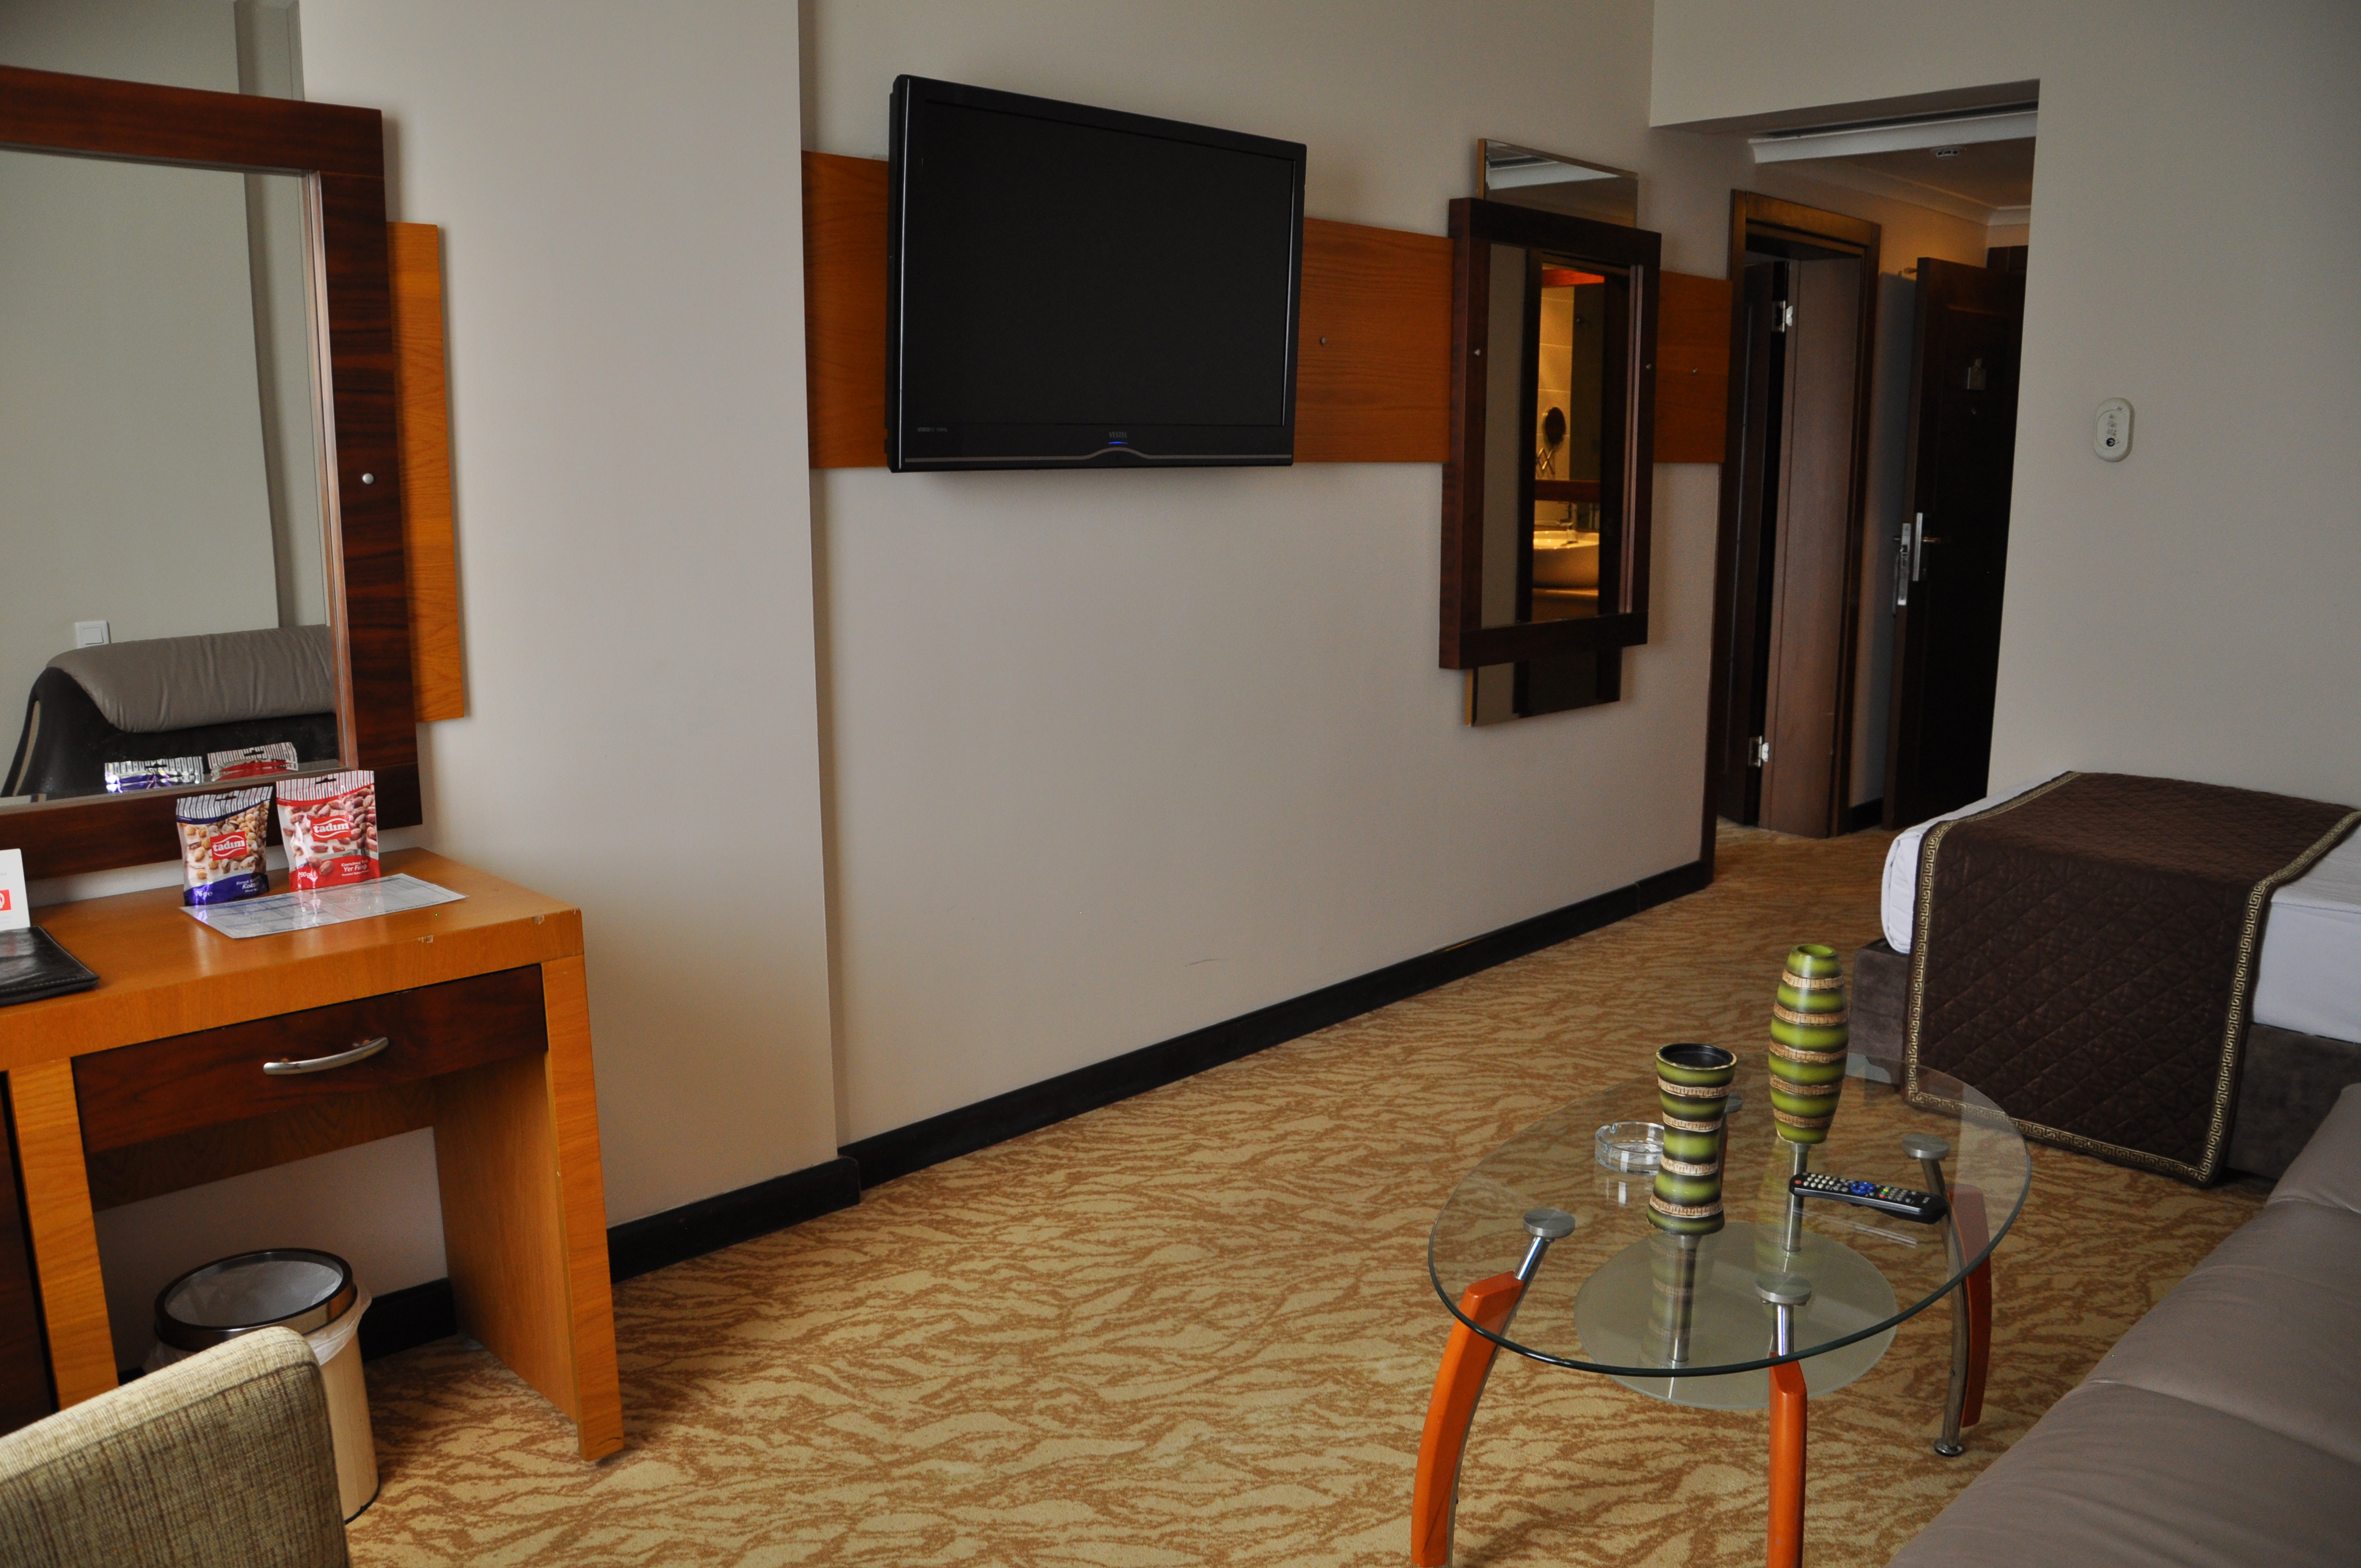 Igneada Resort Hotel & Spa - All Inclusive